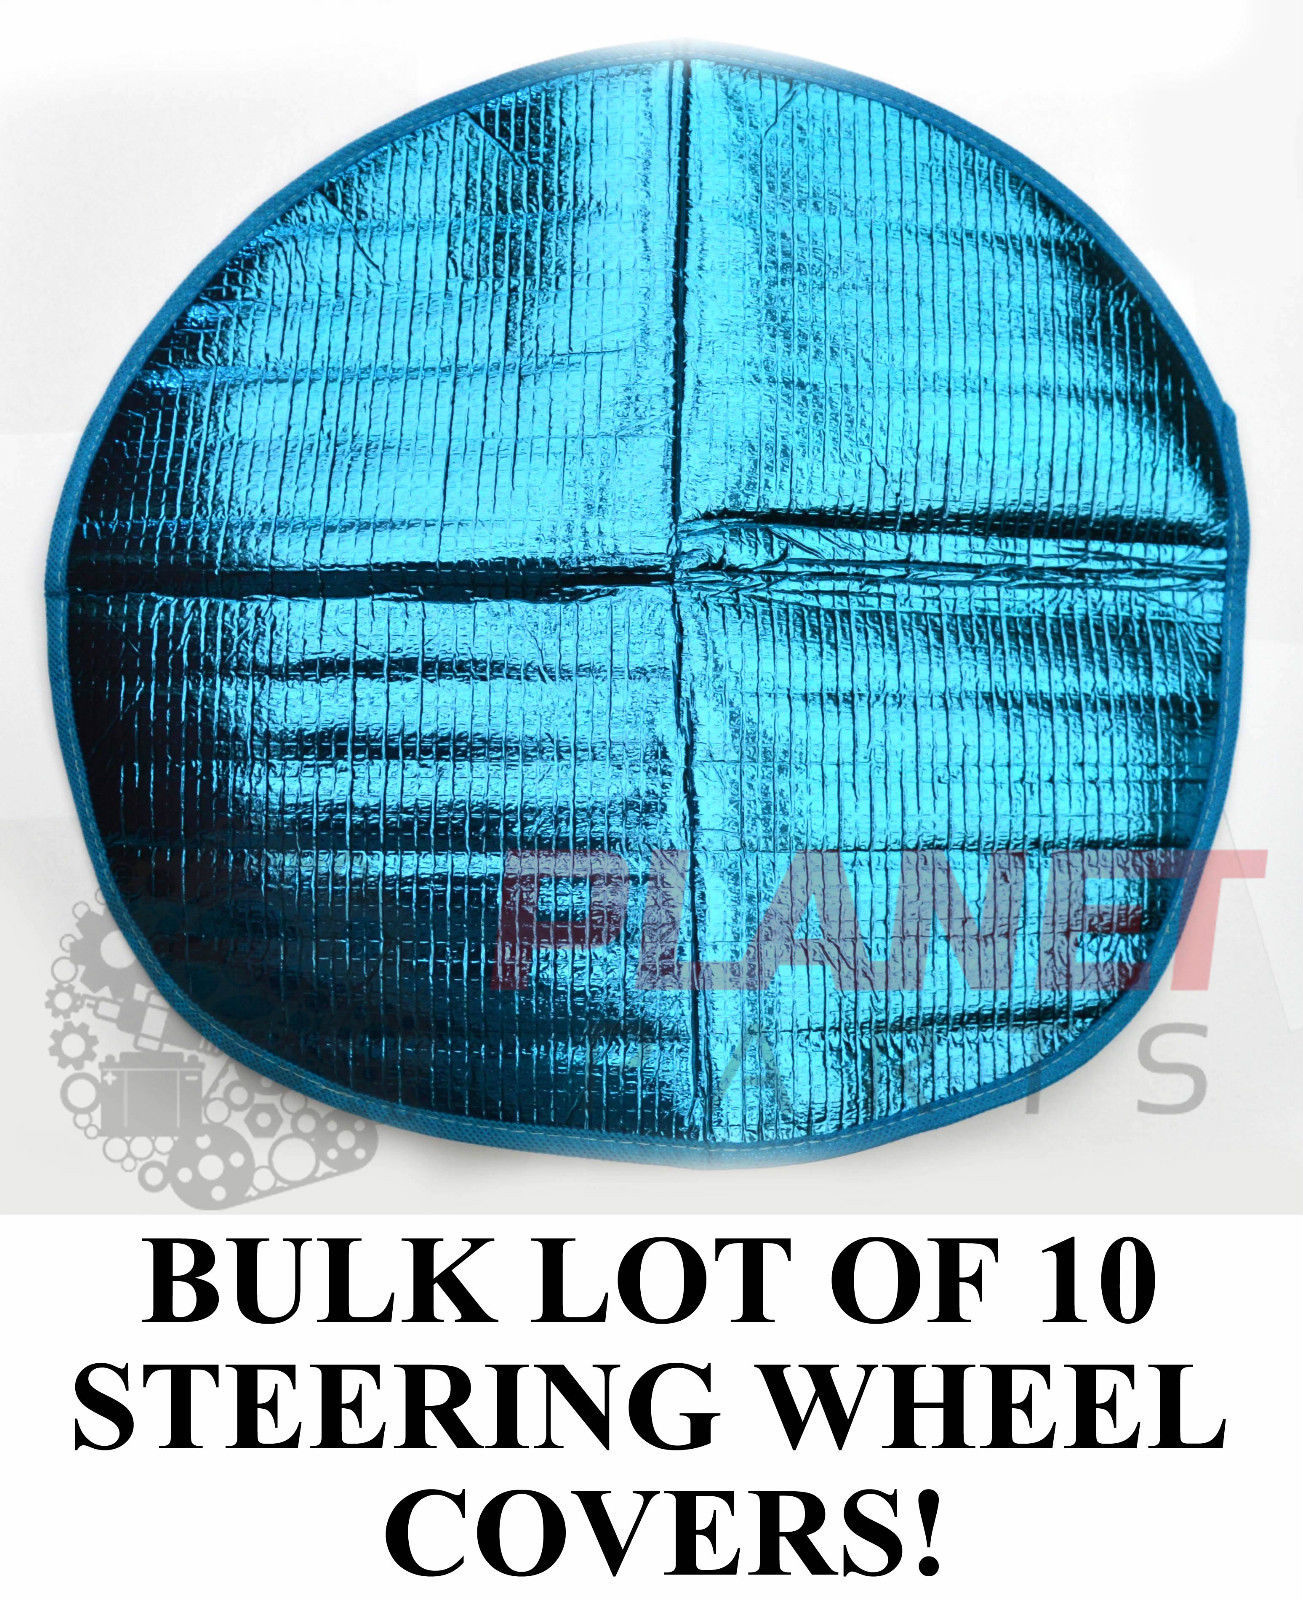 BULK LOT of 10 Steering Wheel Sun Shade Covers BLUE NEW